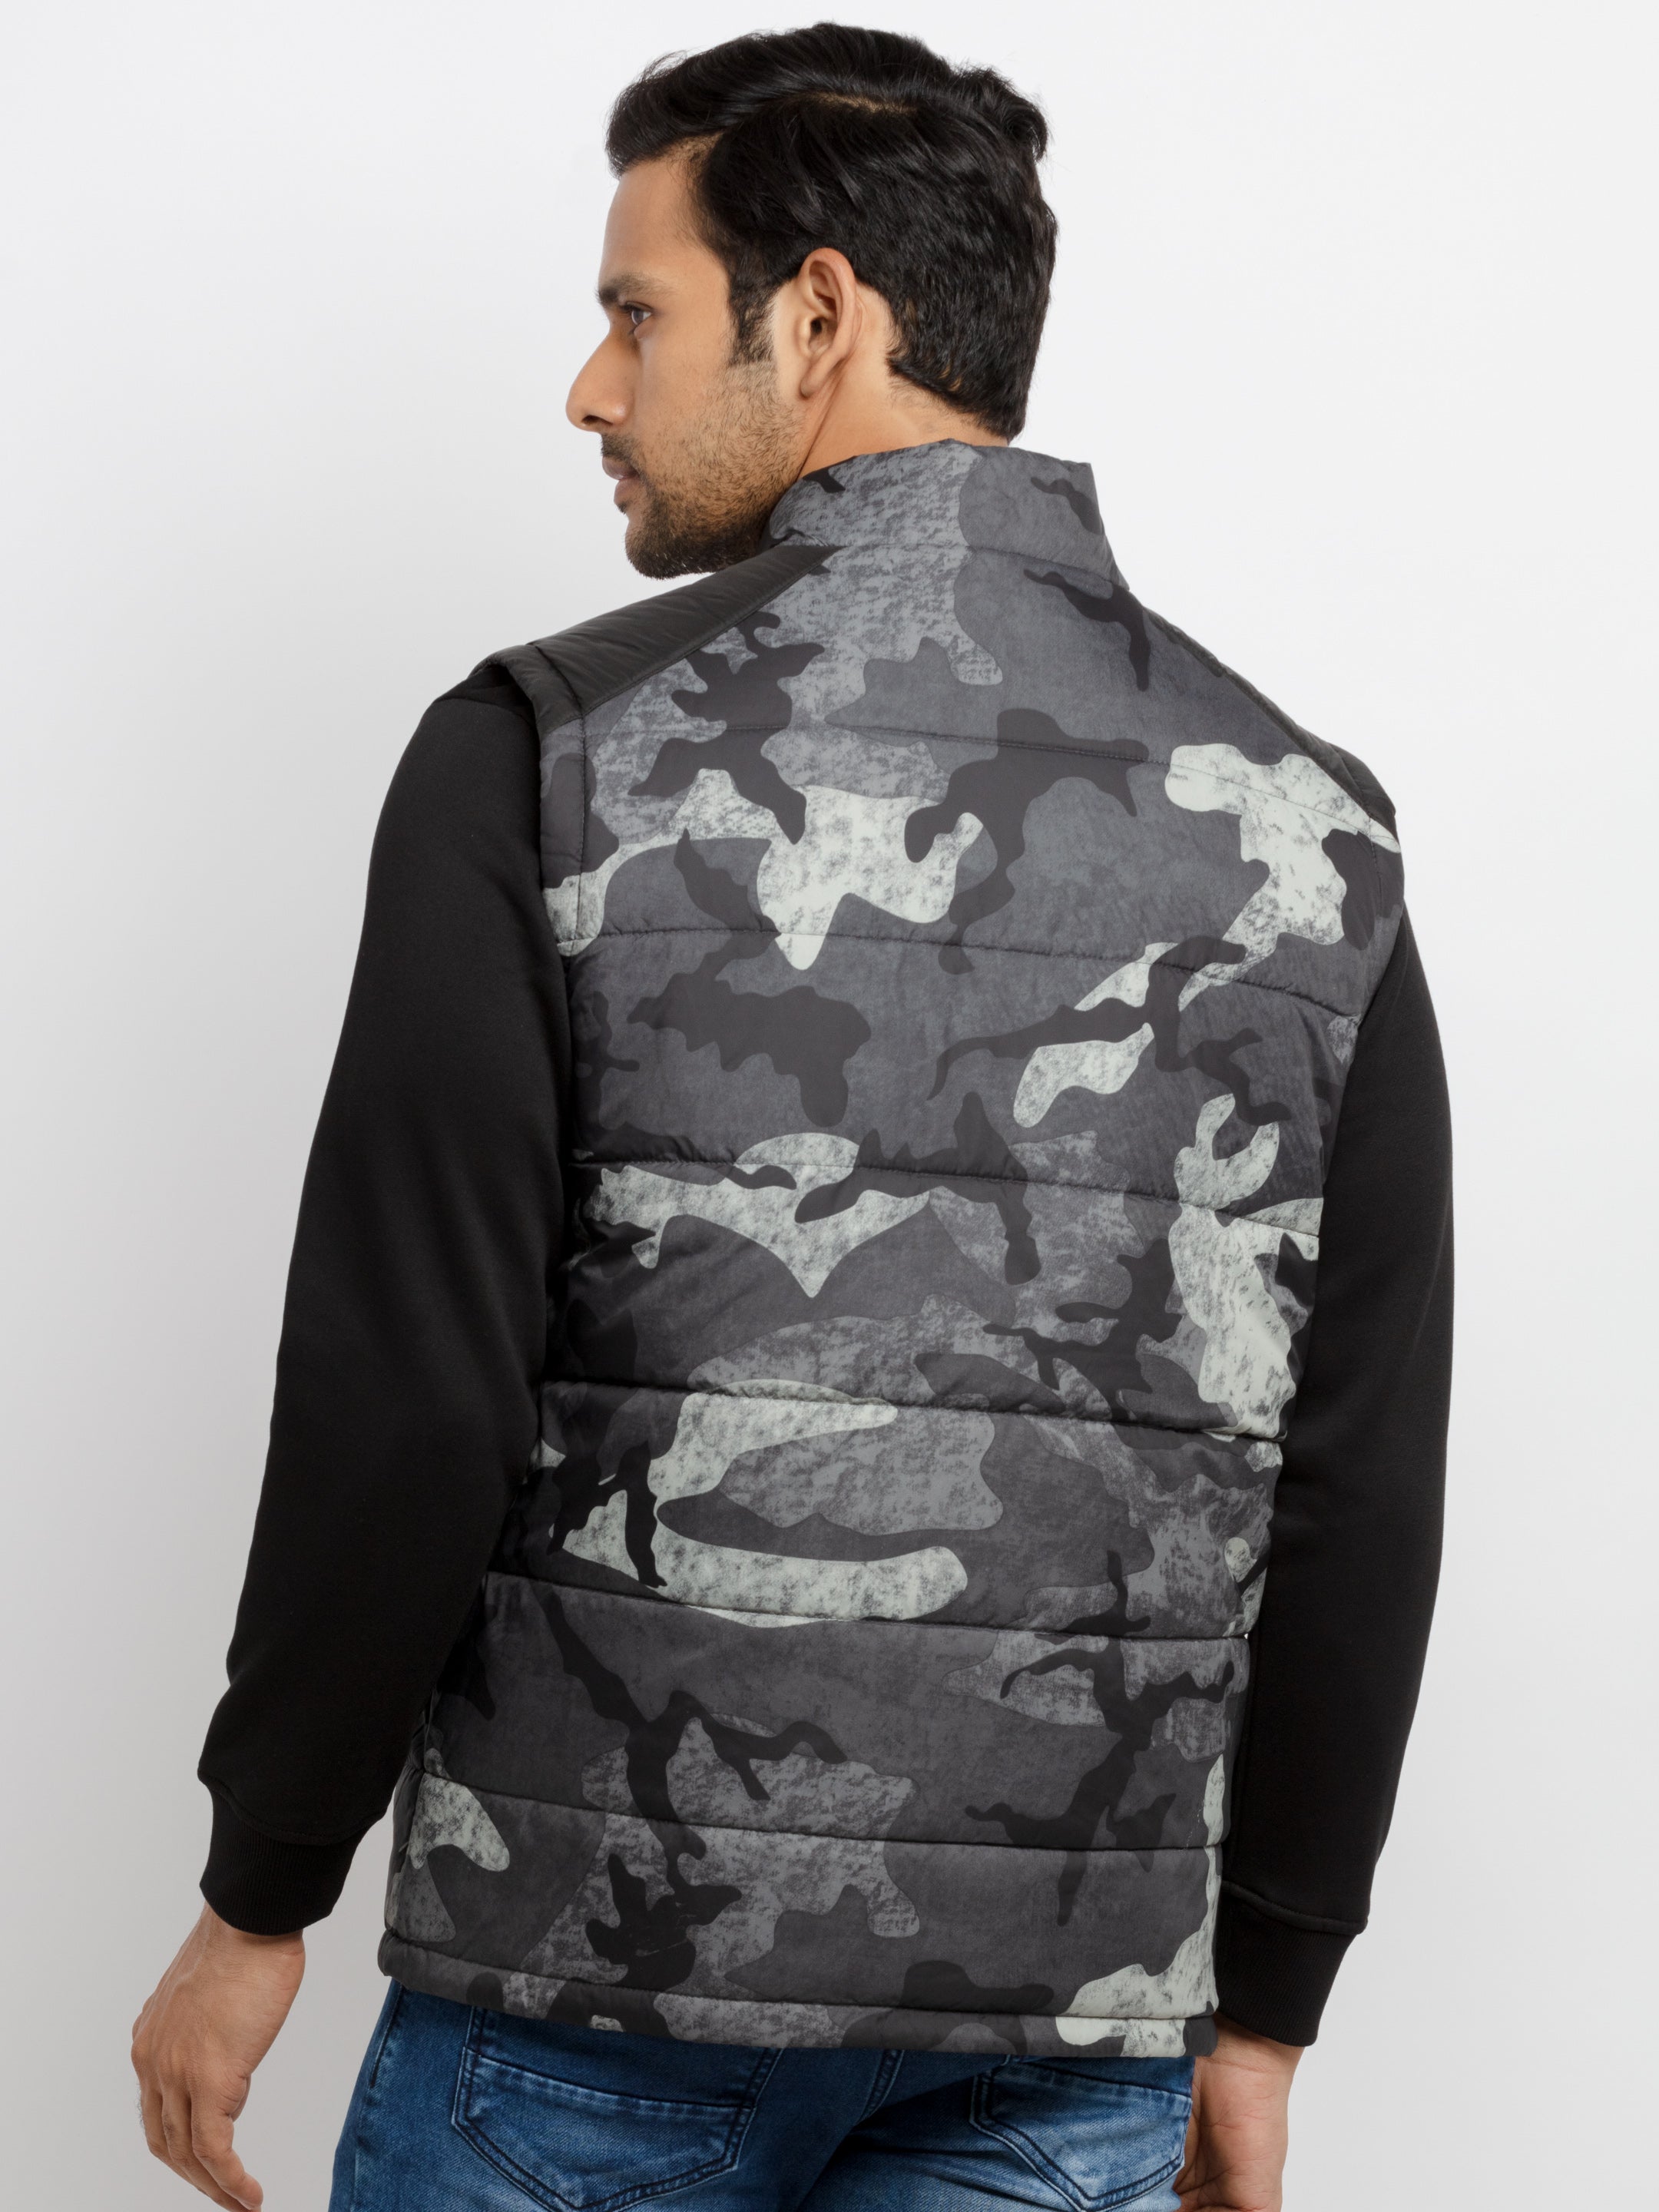 Buy Charcoal Camo Sleeveless Jacket for Plus Size